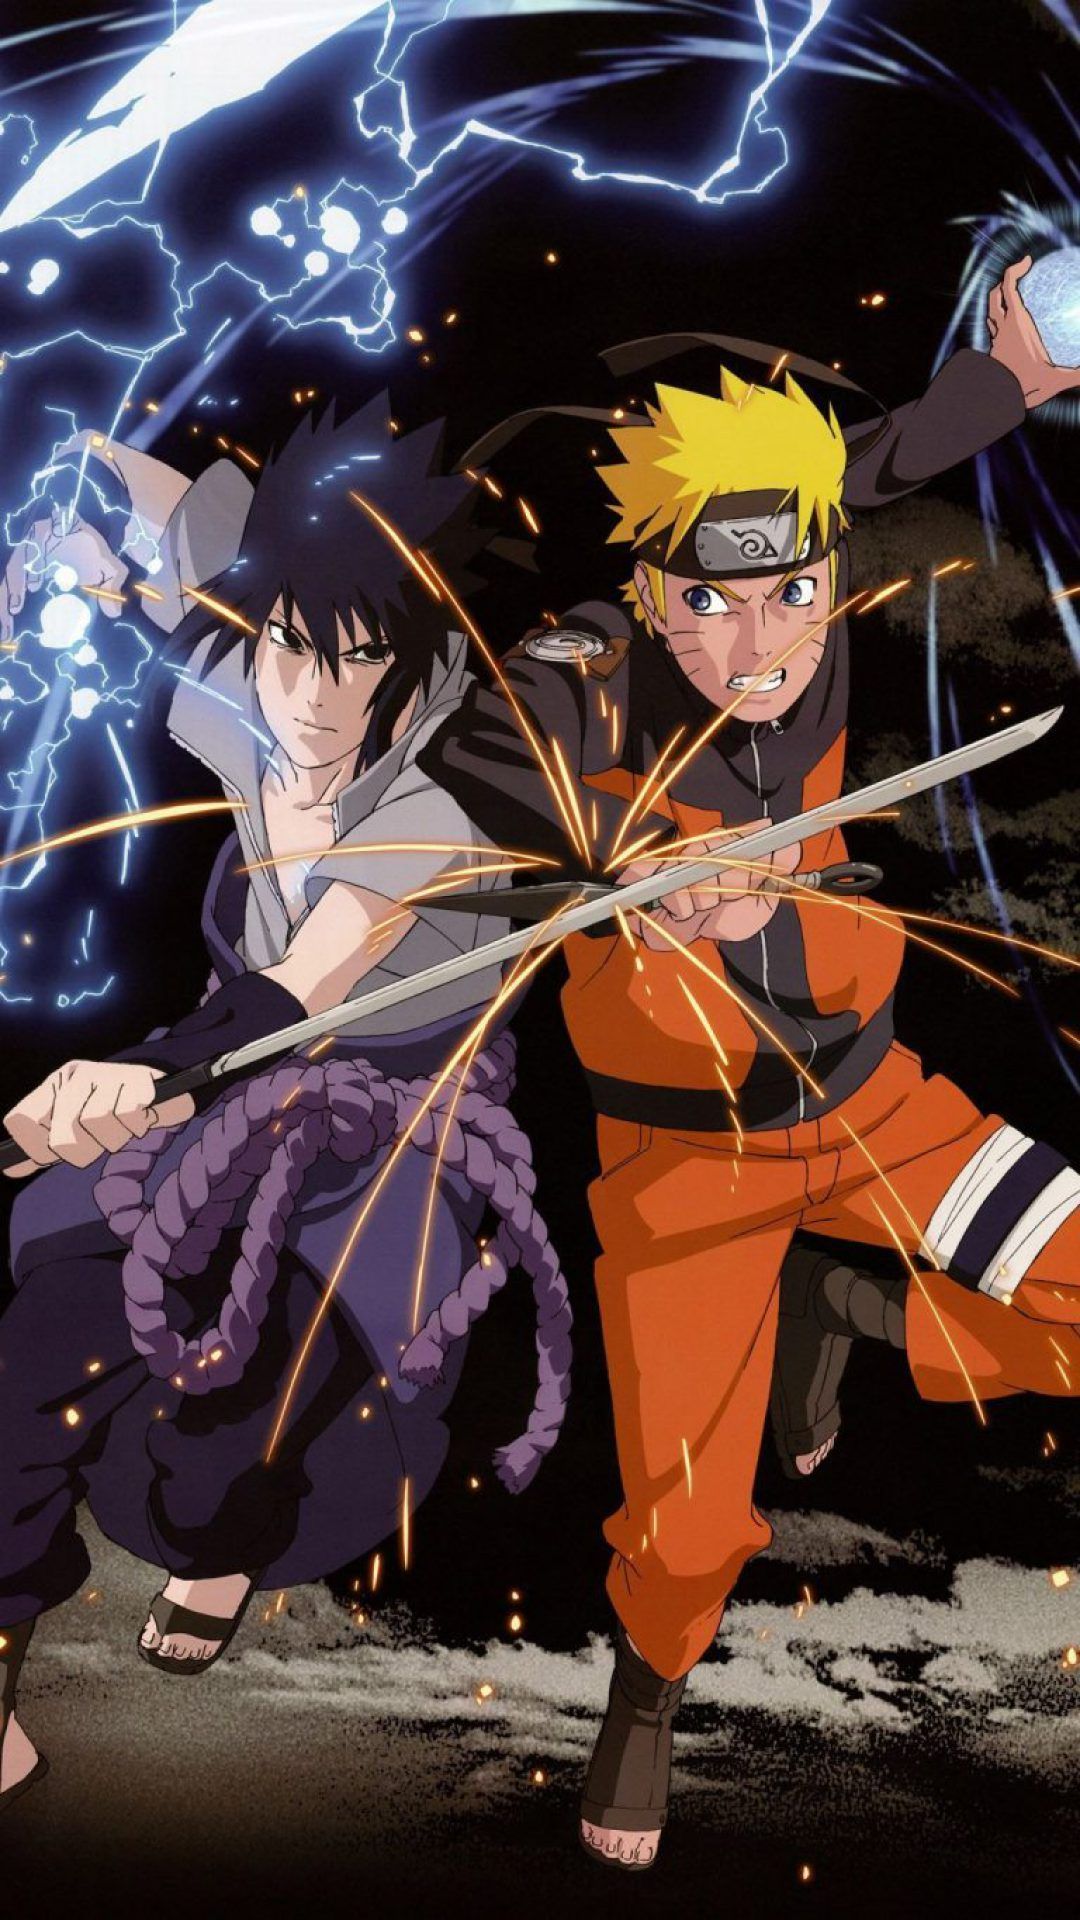 Sakura Wallpaper Anime Naruto | lupon.gov.ph